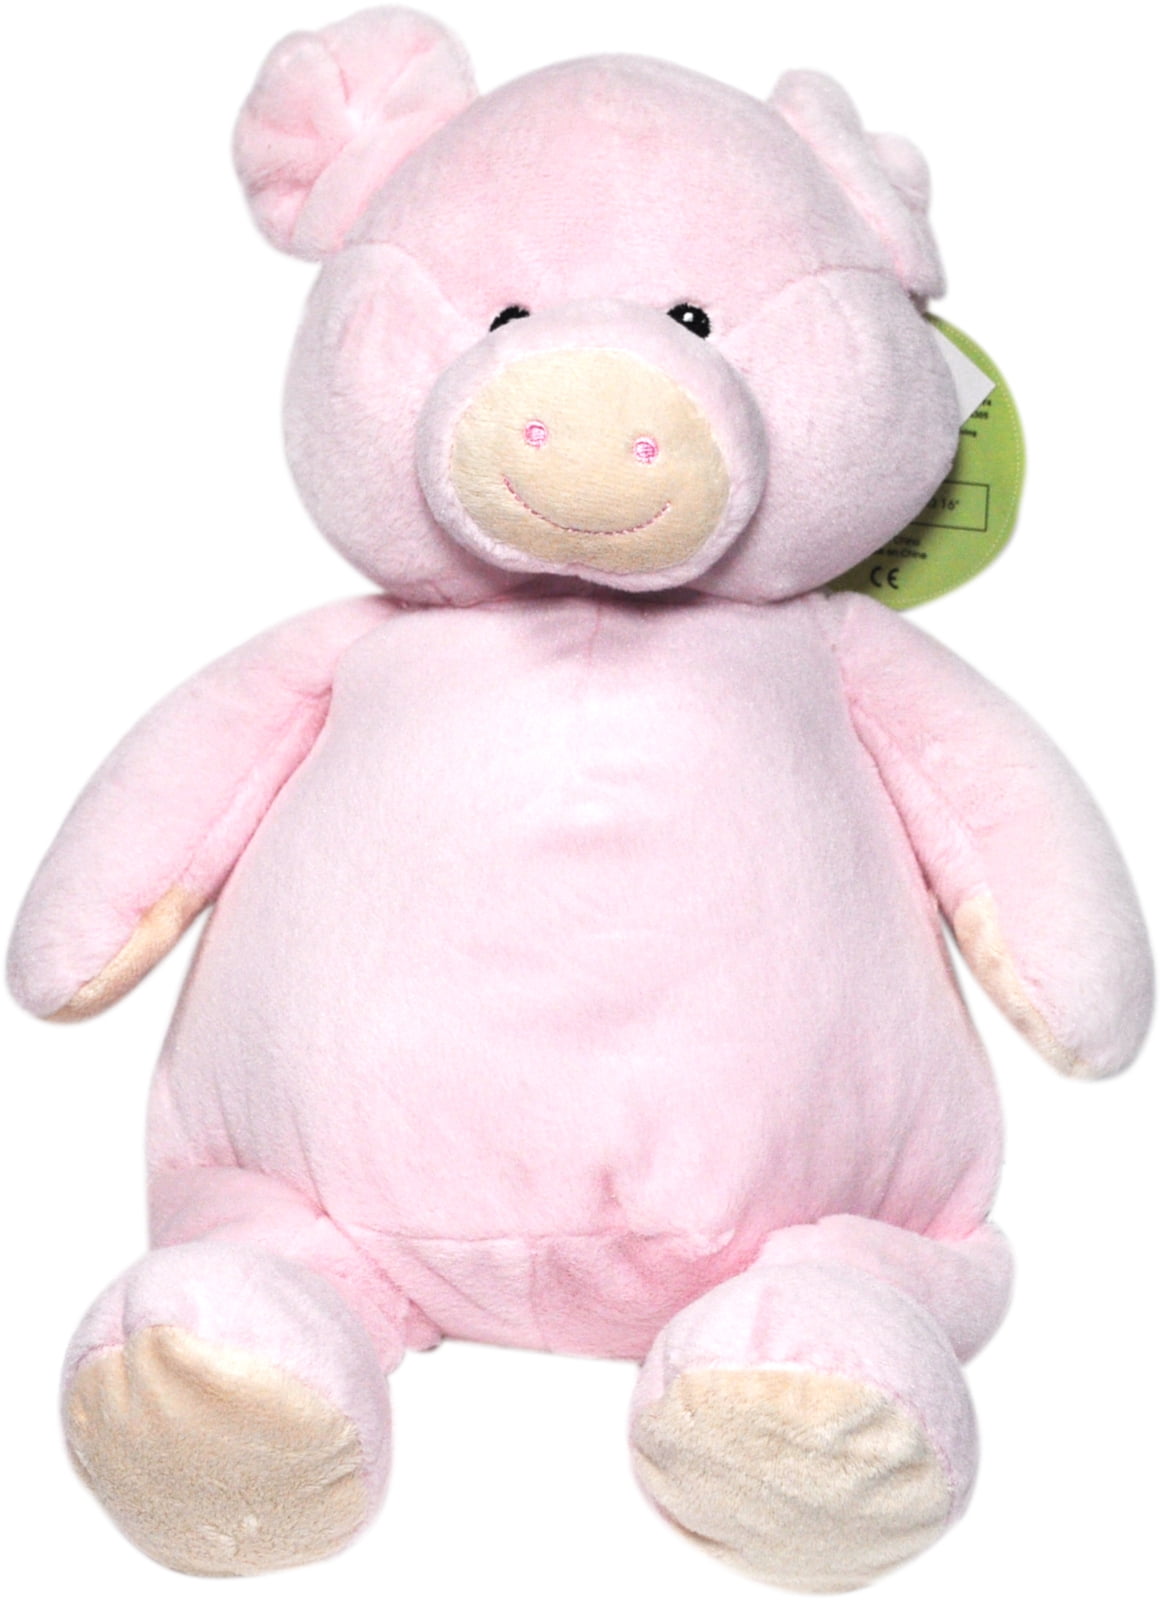 pig stuffed animal walmart